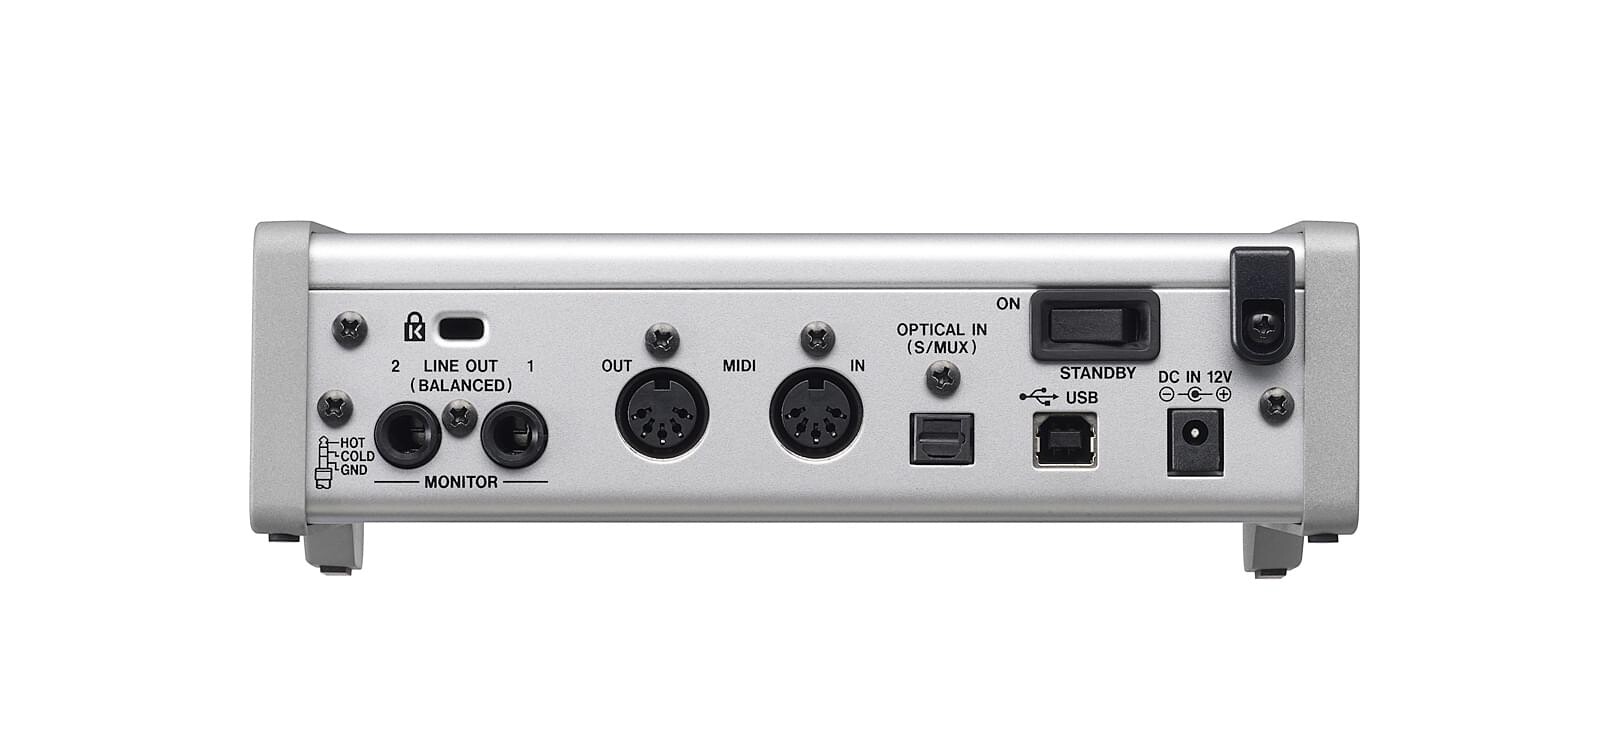 Tascam-SERIES-102i-USB-Audio-MIDI-Interface-mit-DSP-Mixer-10-Eingange-4-Ausgange